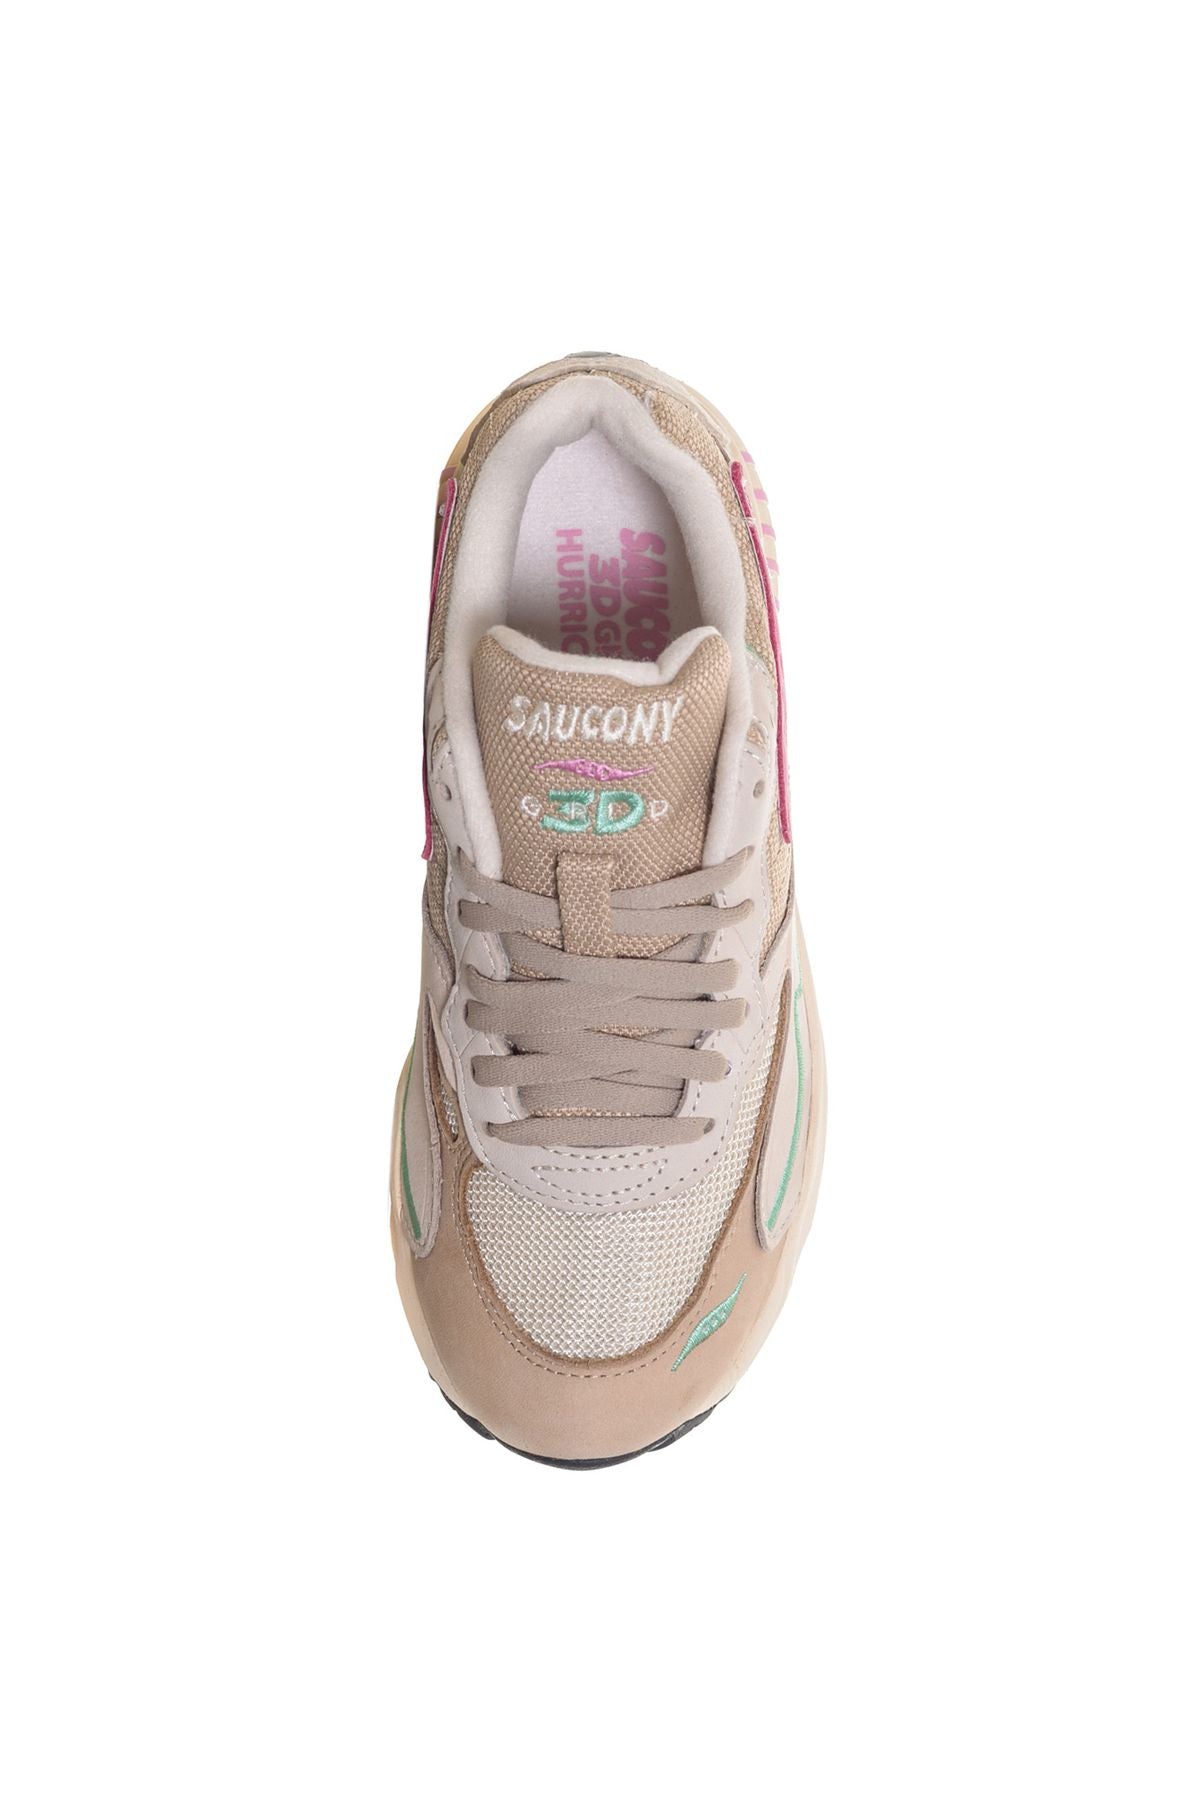 SAUCONY Spring/Summer Sneakers s70670